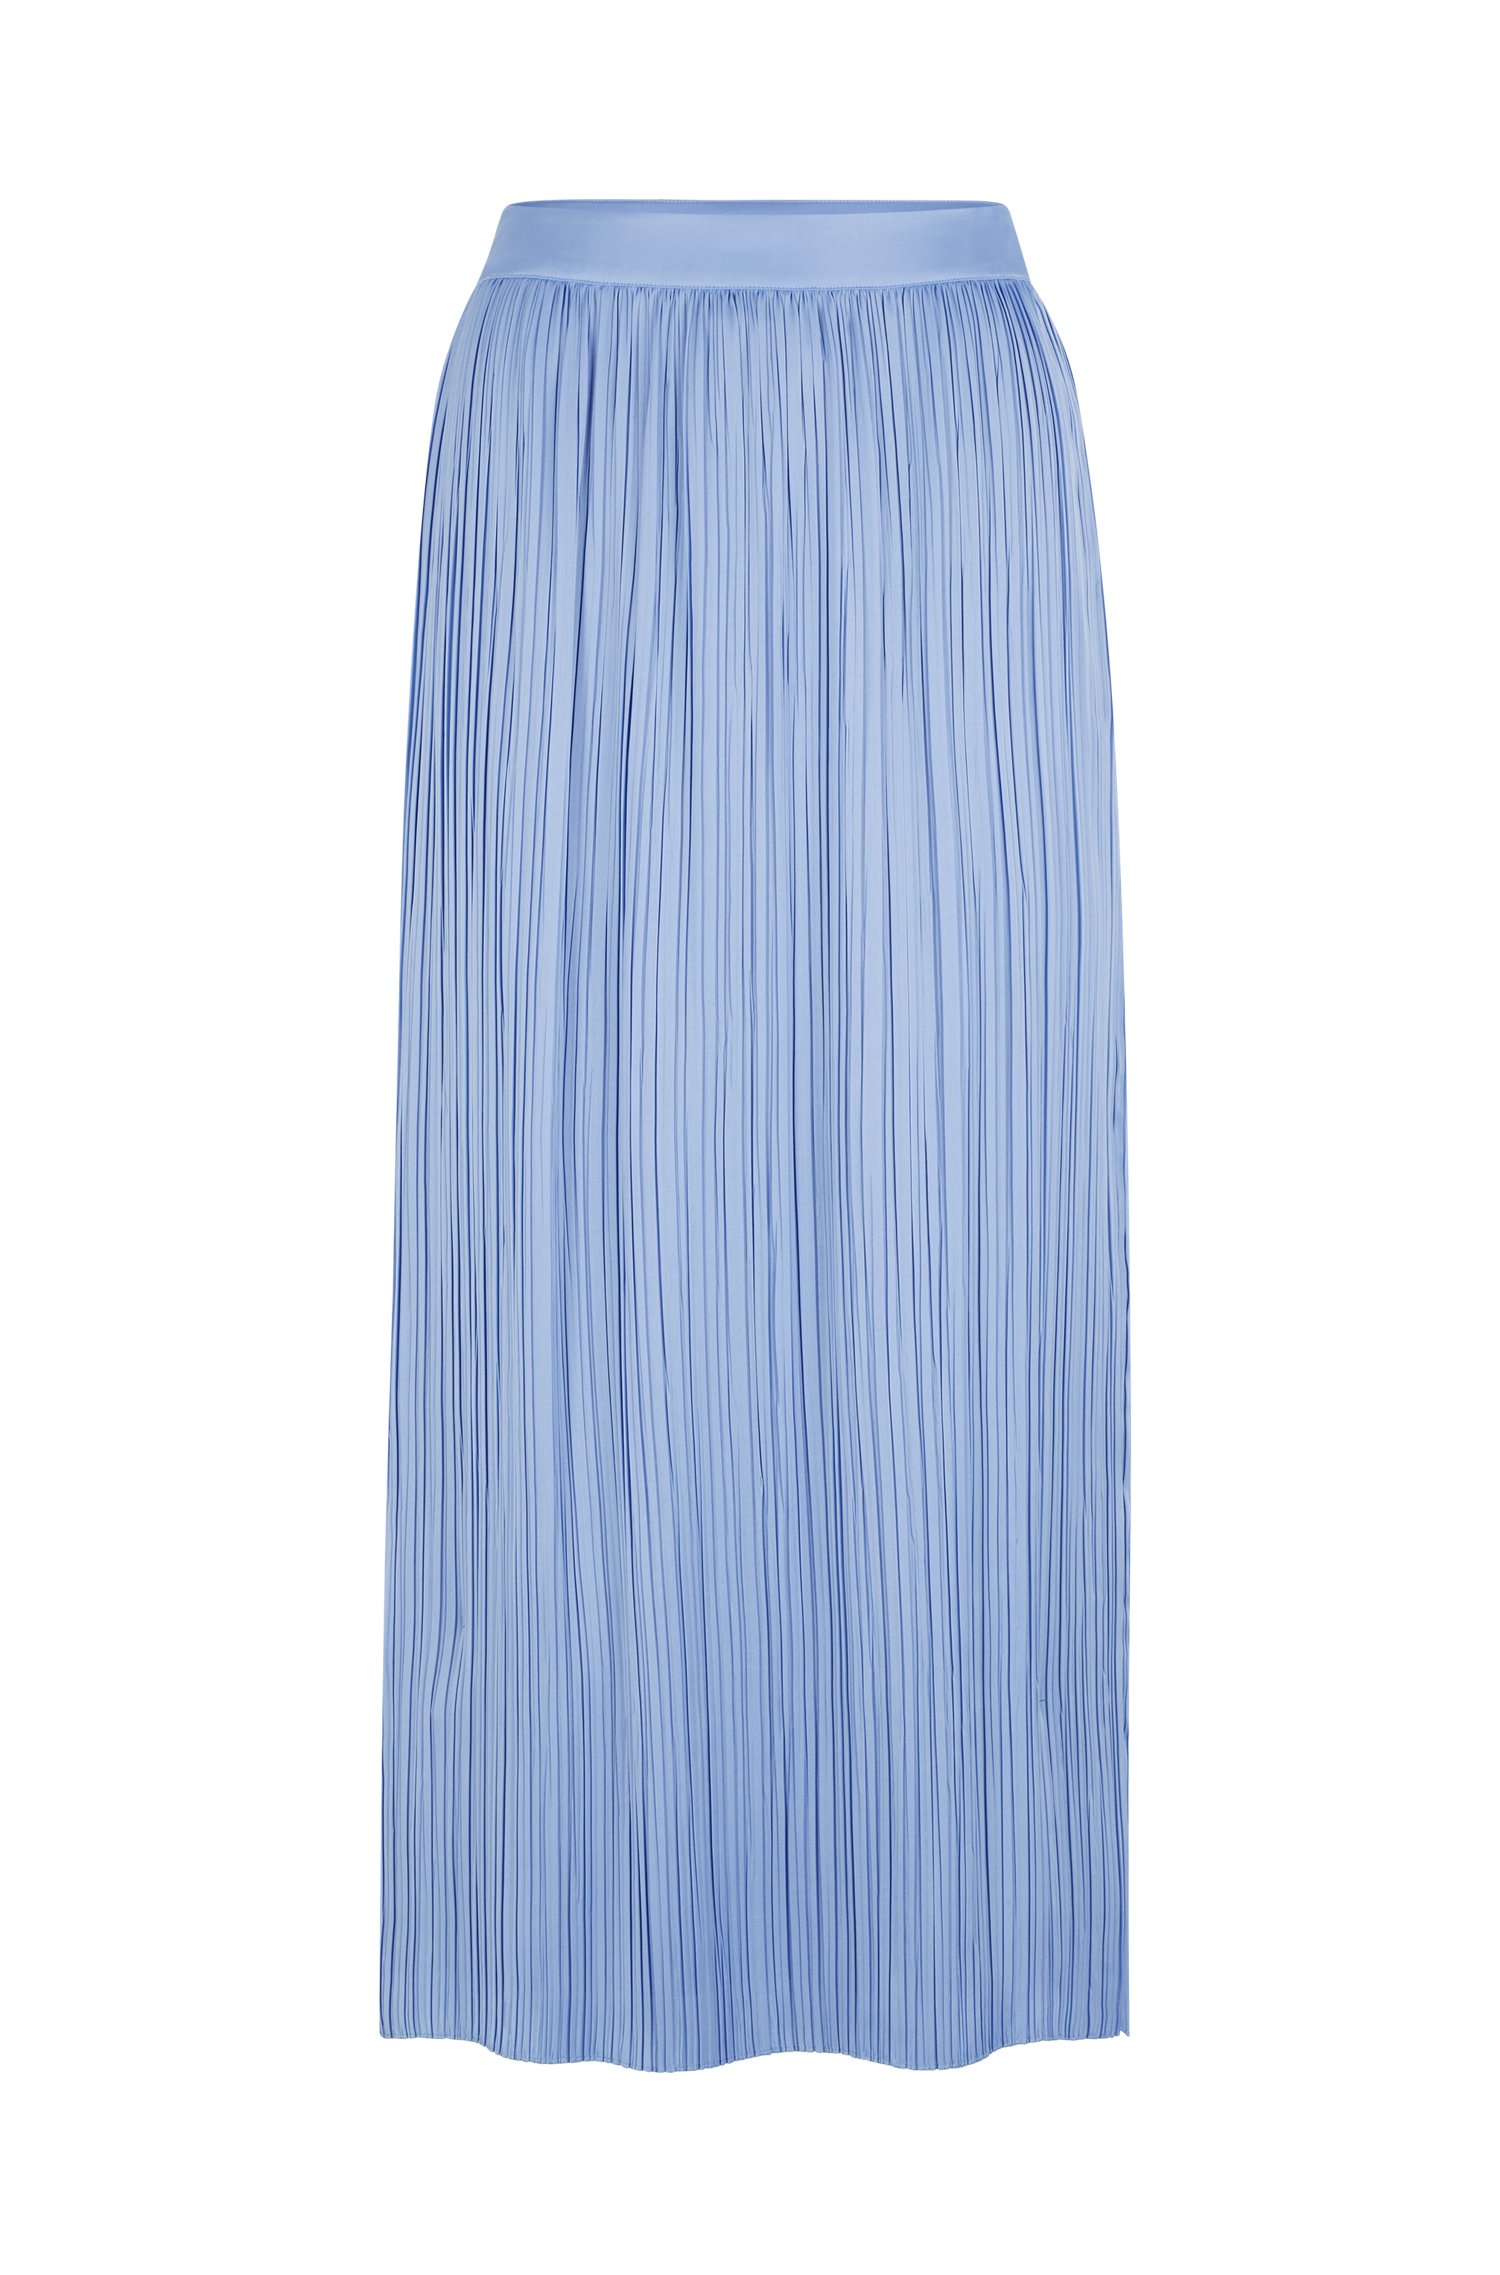 Long skirt micro-pleated sateen fabric